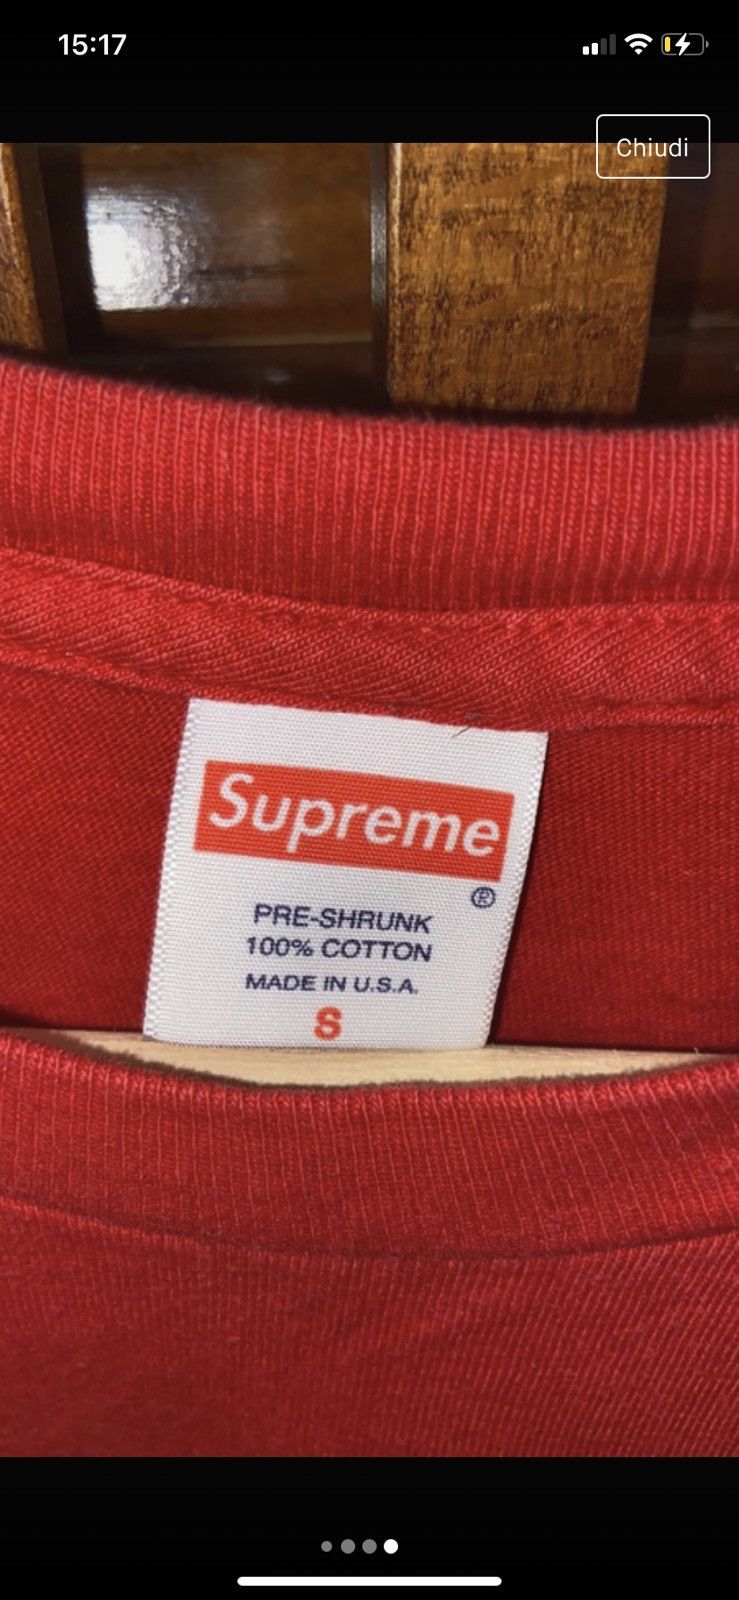 Supreme Supreme ET t-shirt red size S VG condition FW15 Size US S / EU 44-46 / 1 - 6 Thumbnail